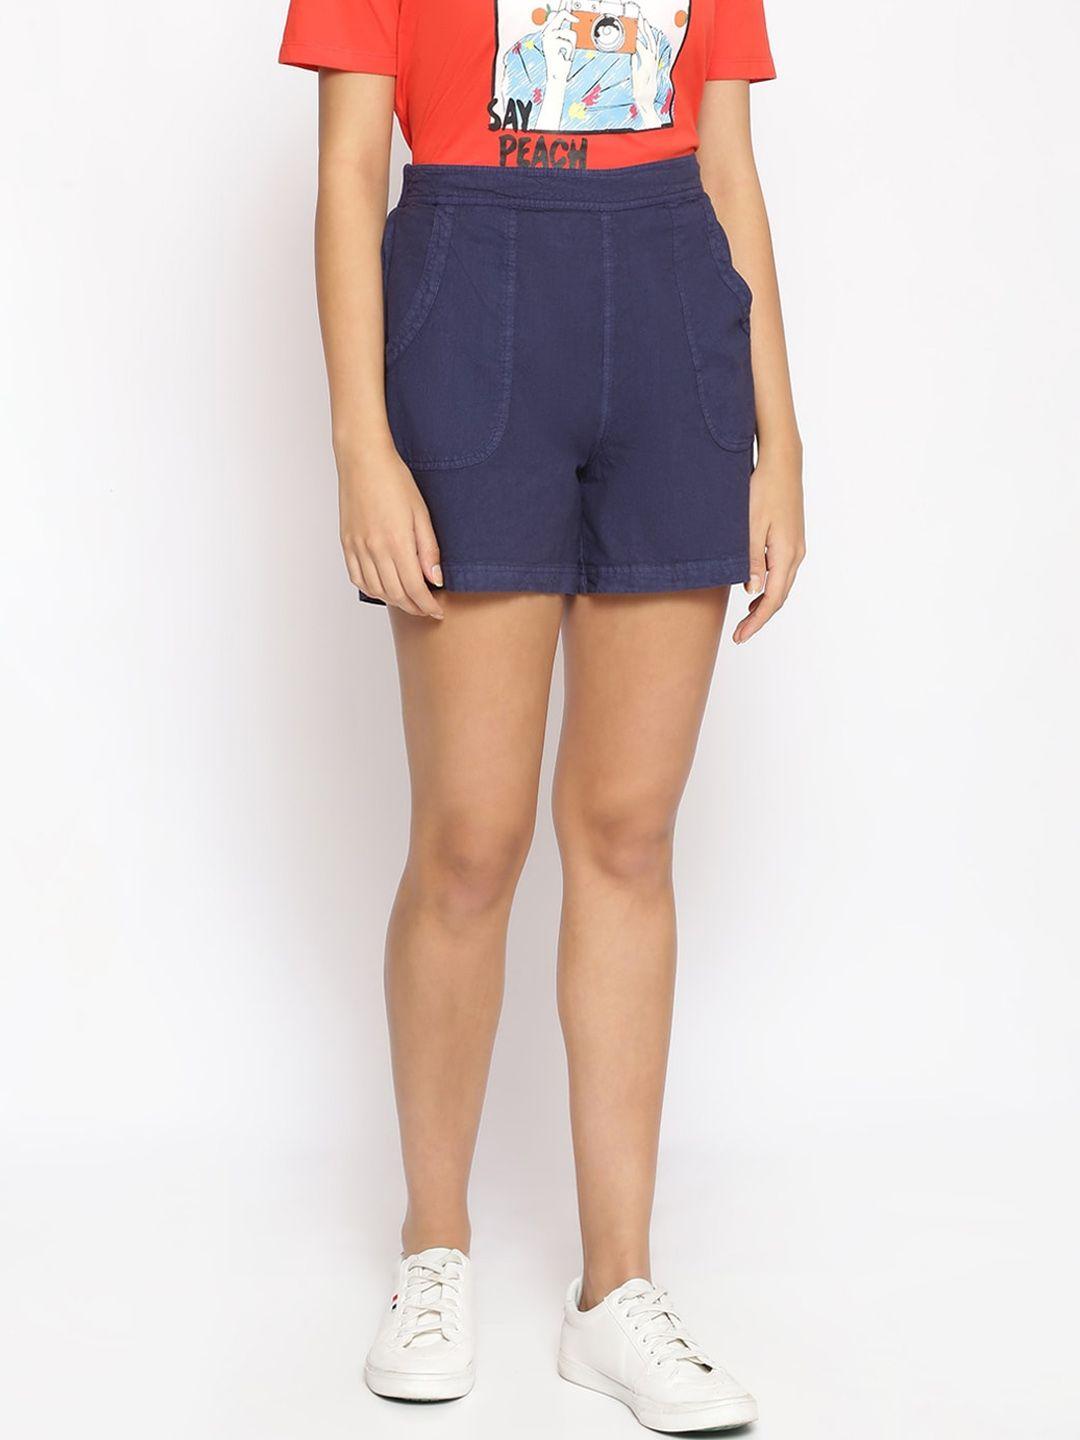 Oxolloxo Women Navy Blue Solid Regular Fit Regular Shorts